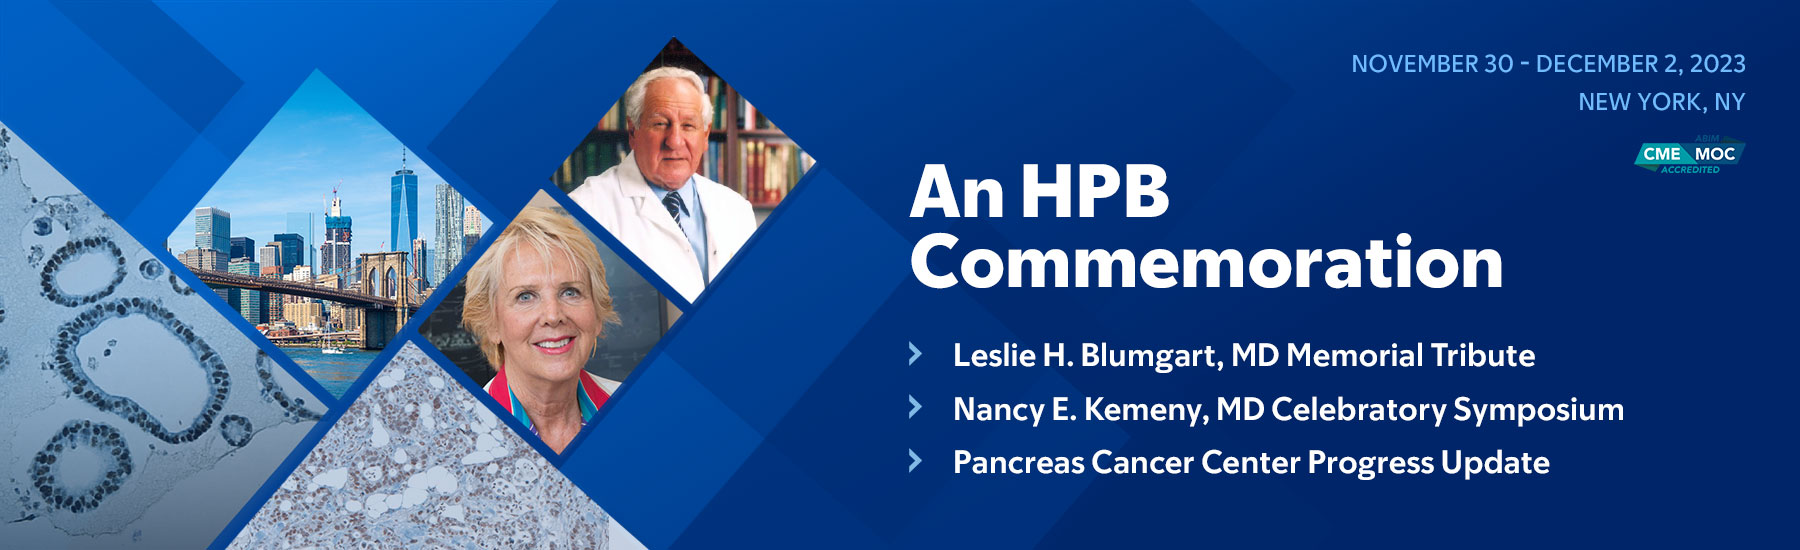 An HPB Commemoration: Leslie H. Blumgart, MD Memorial Tribute; Nancy E. Kemeny, MD Celebratory Symposium; Pancreas Cancer Center Progress Update Banner